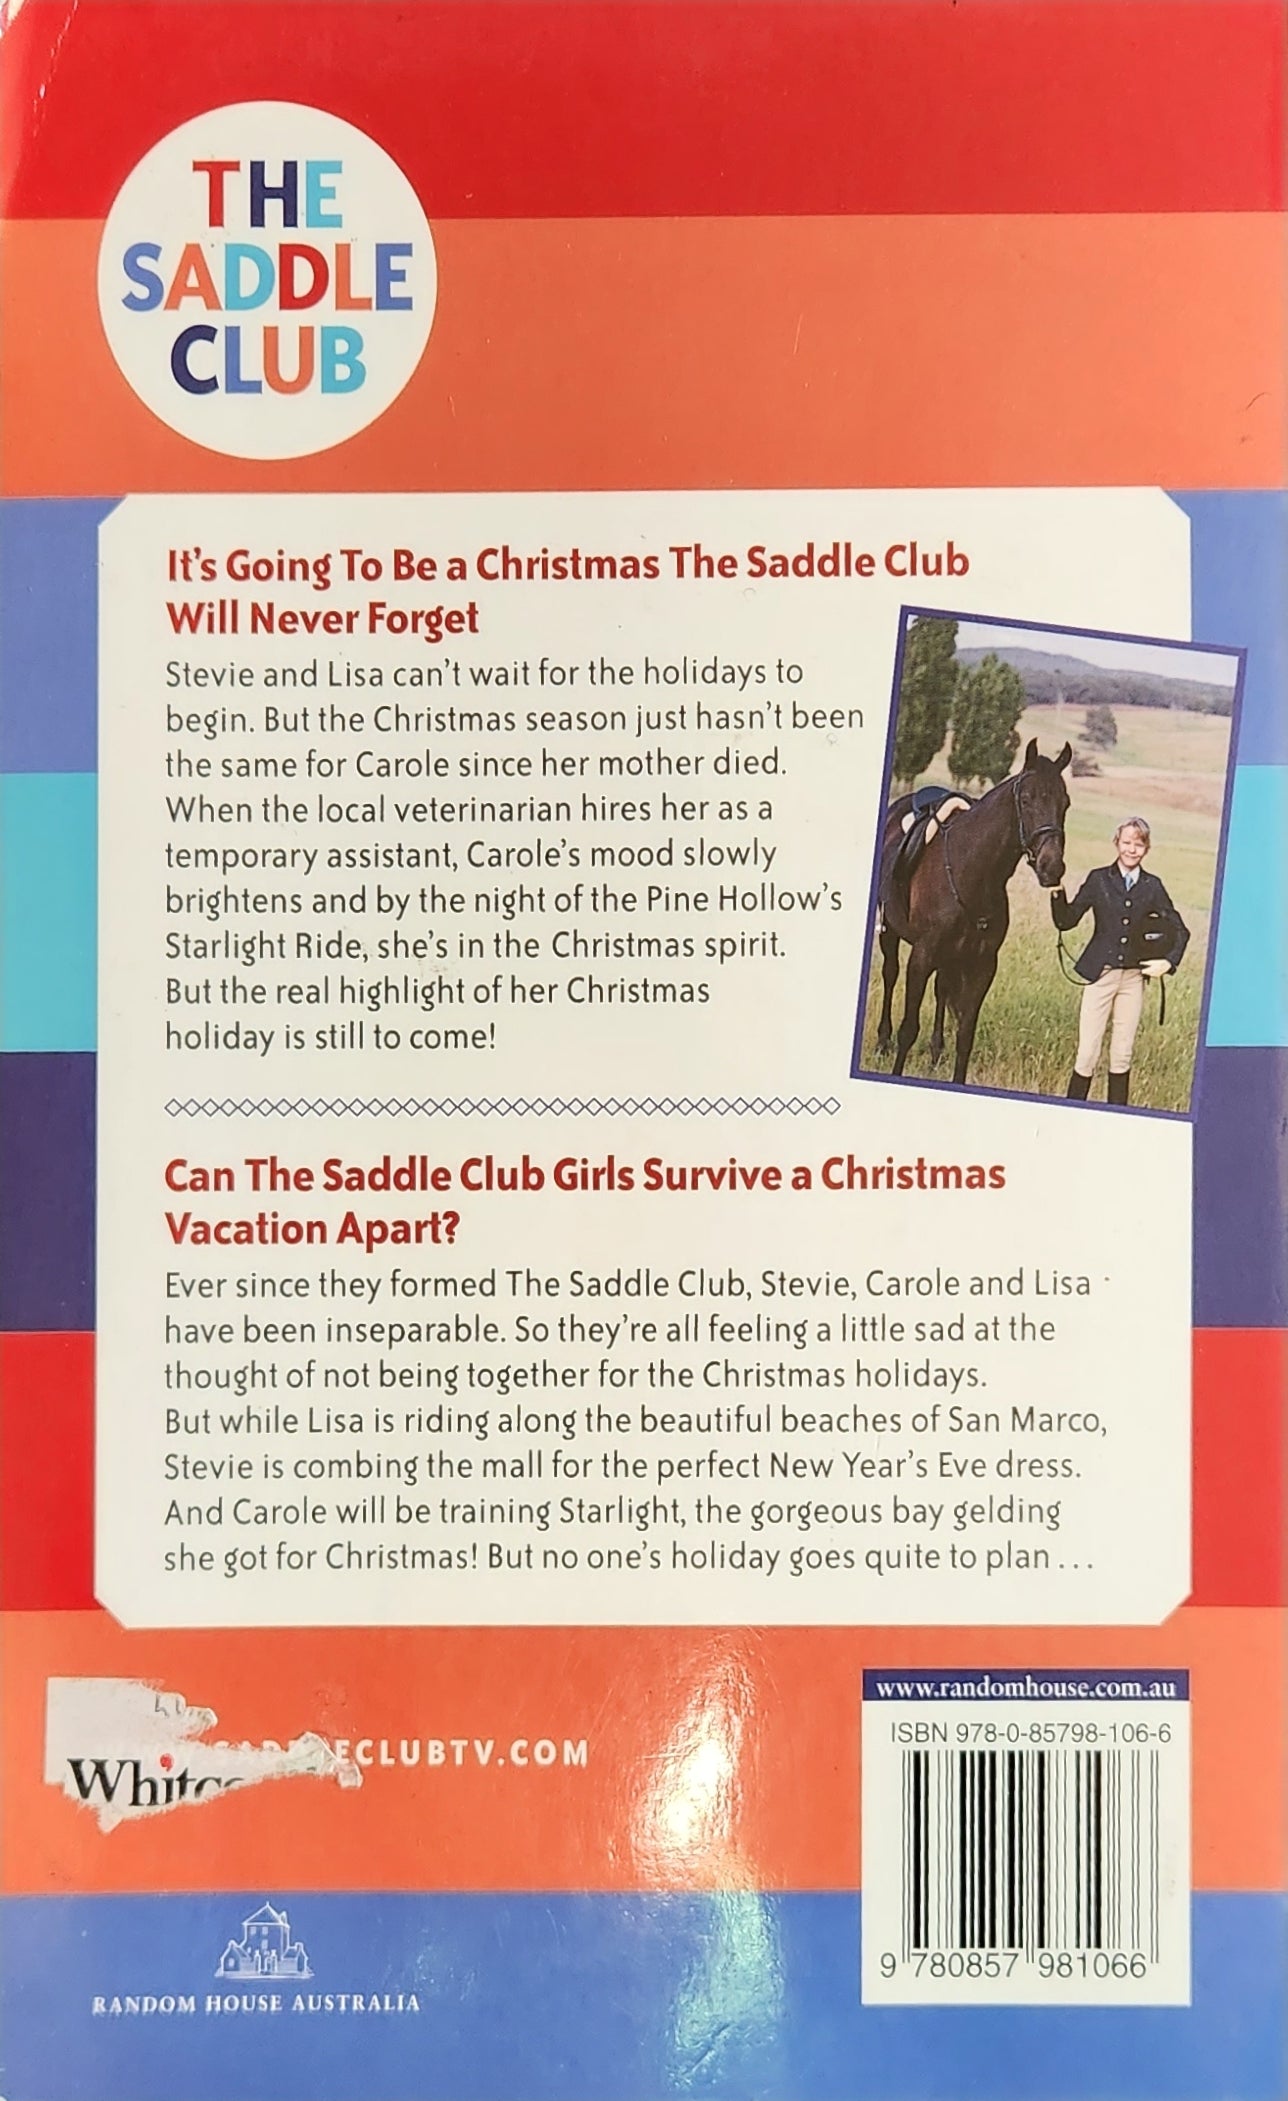 Saddle Club: Starlight Christmas & Sea Horse (2 books in 1)